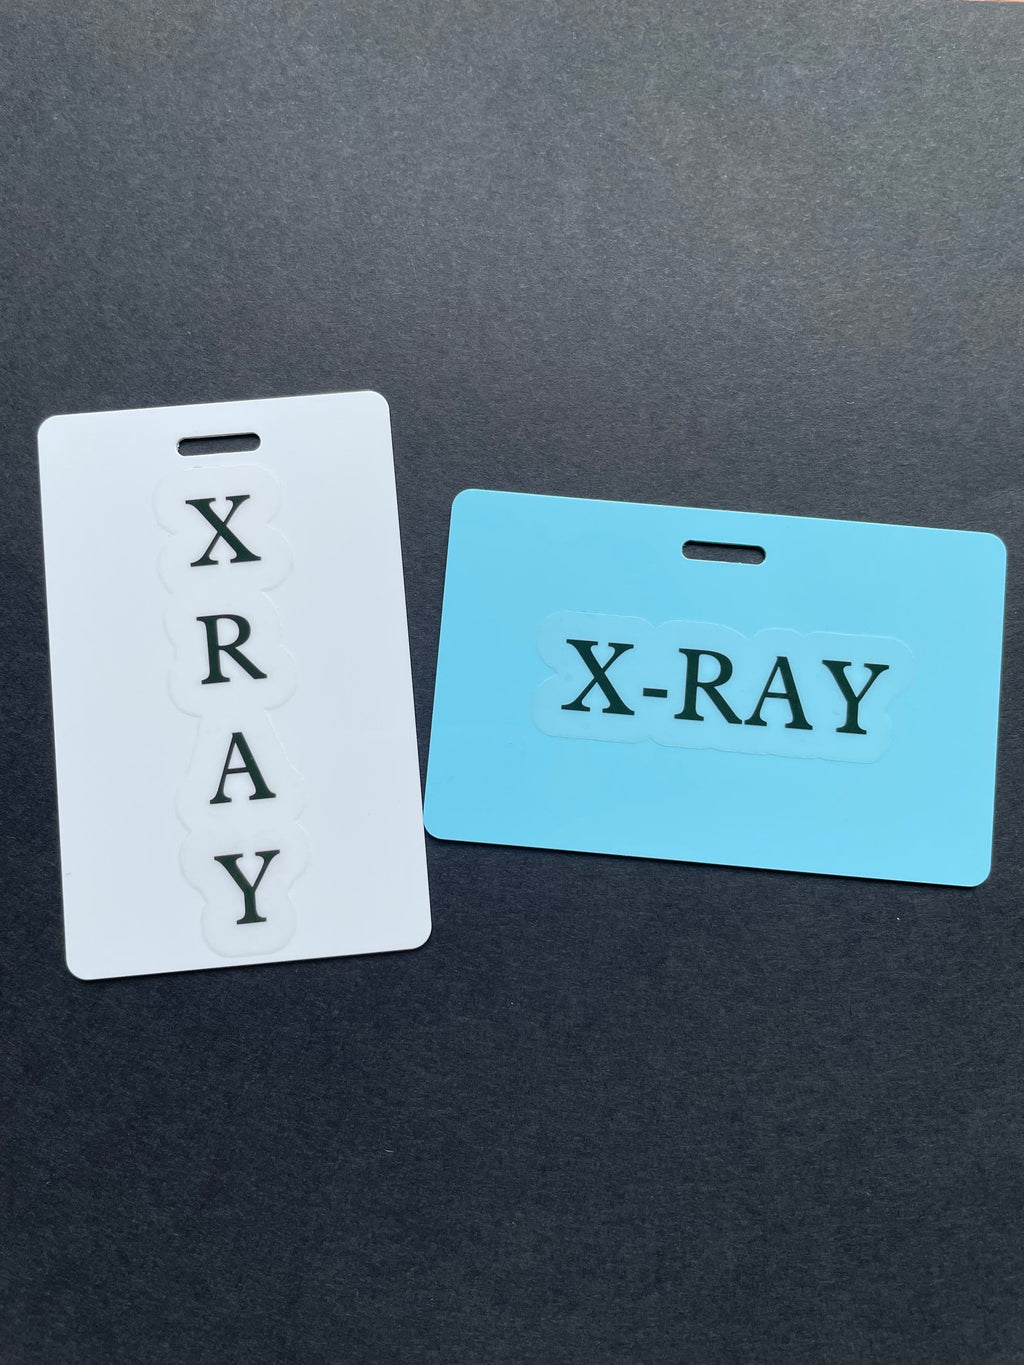 X-RAY Marker Holder, PVC, ID Badge, Xray, Portrait, Landscape